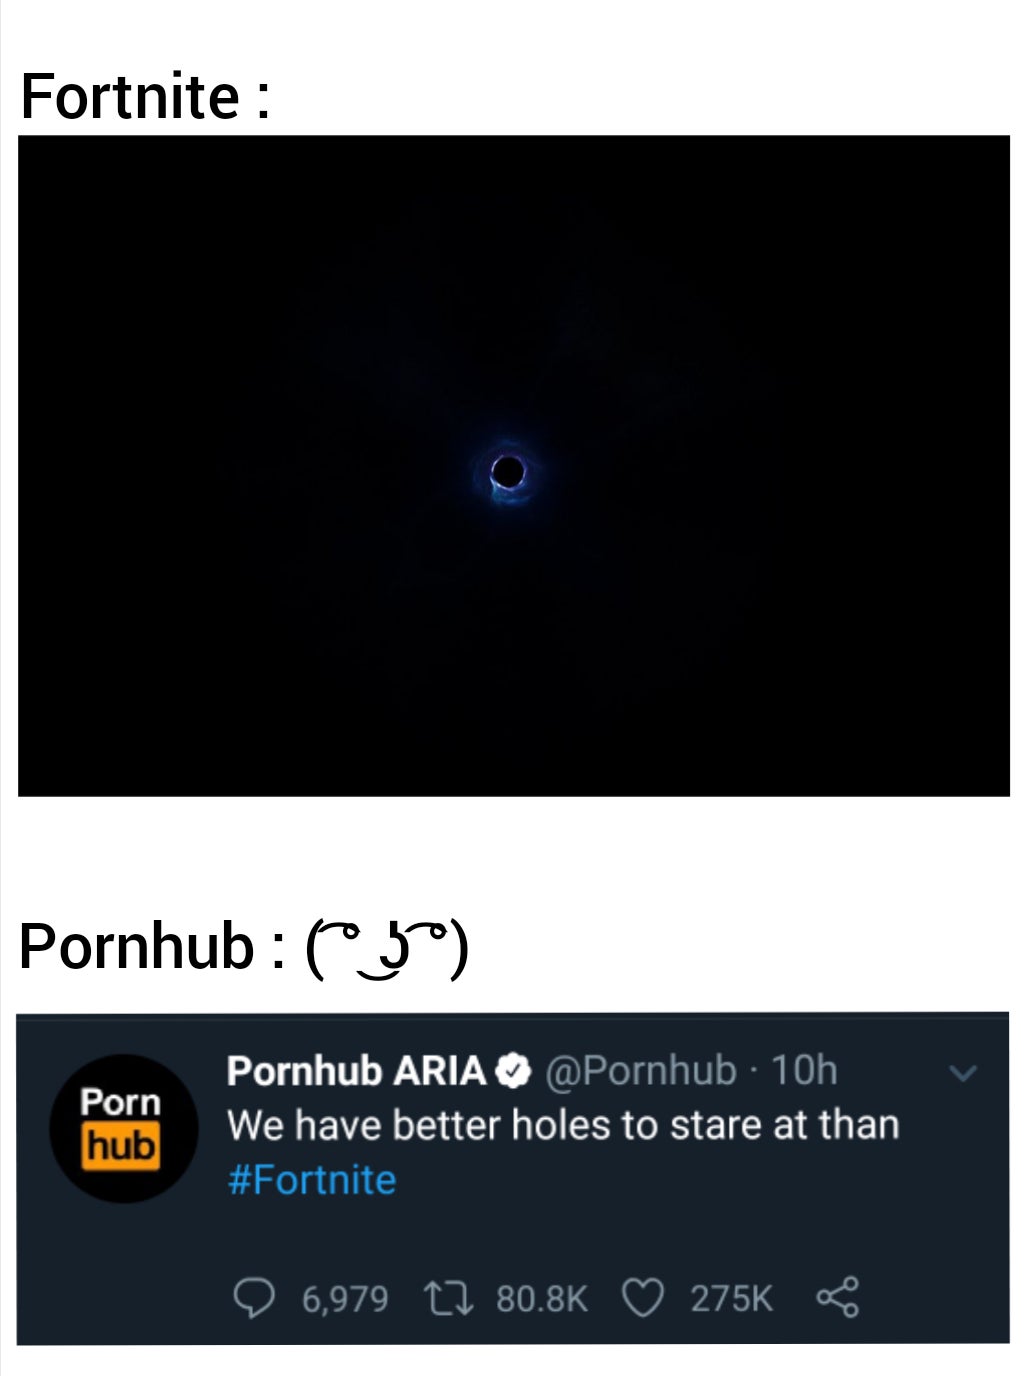 screenshot - Fortnite Pornhub 050 Porn hub Pornhub Aria 10h We have better holes to stare at than ' 6,979 22